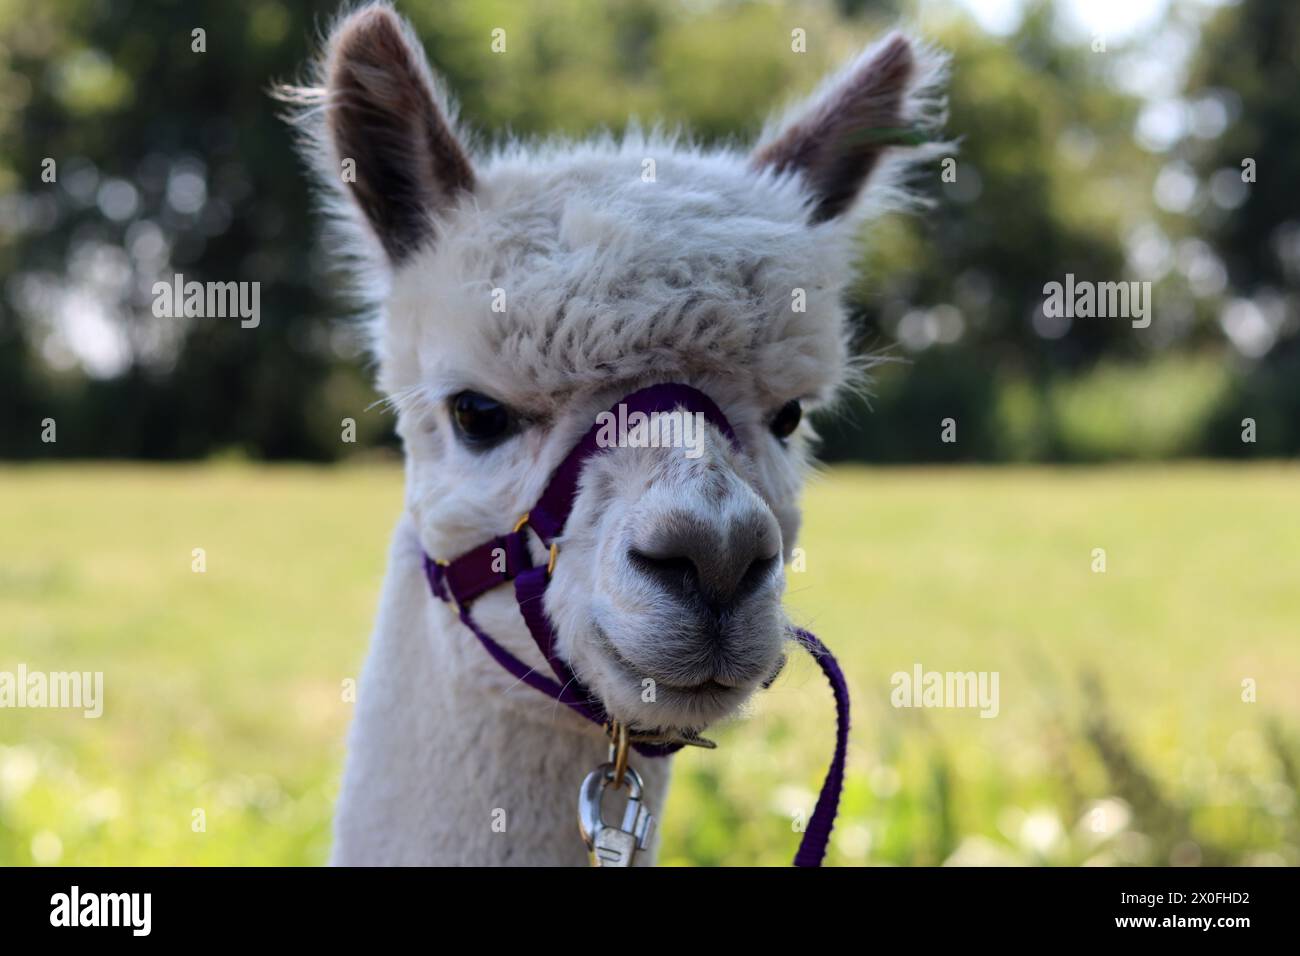 Cute Alpaca close up portrait. Domesticated animal on a farm. Dutch countryside living. Summer day photo. Stock Photo